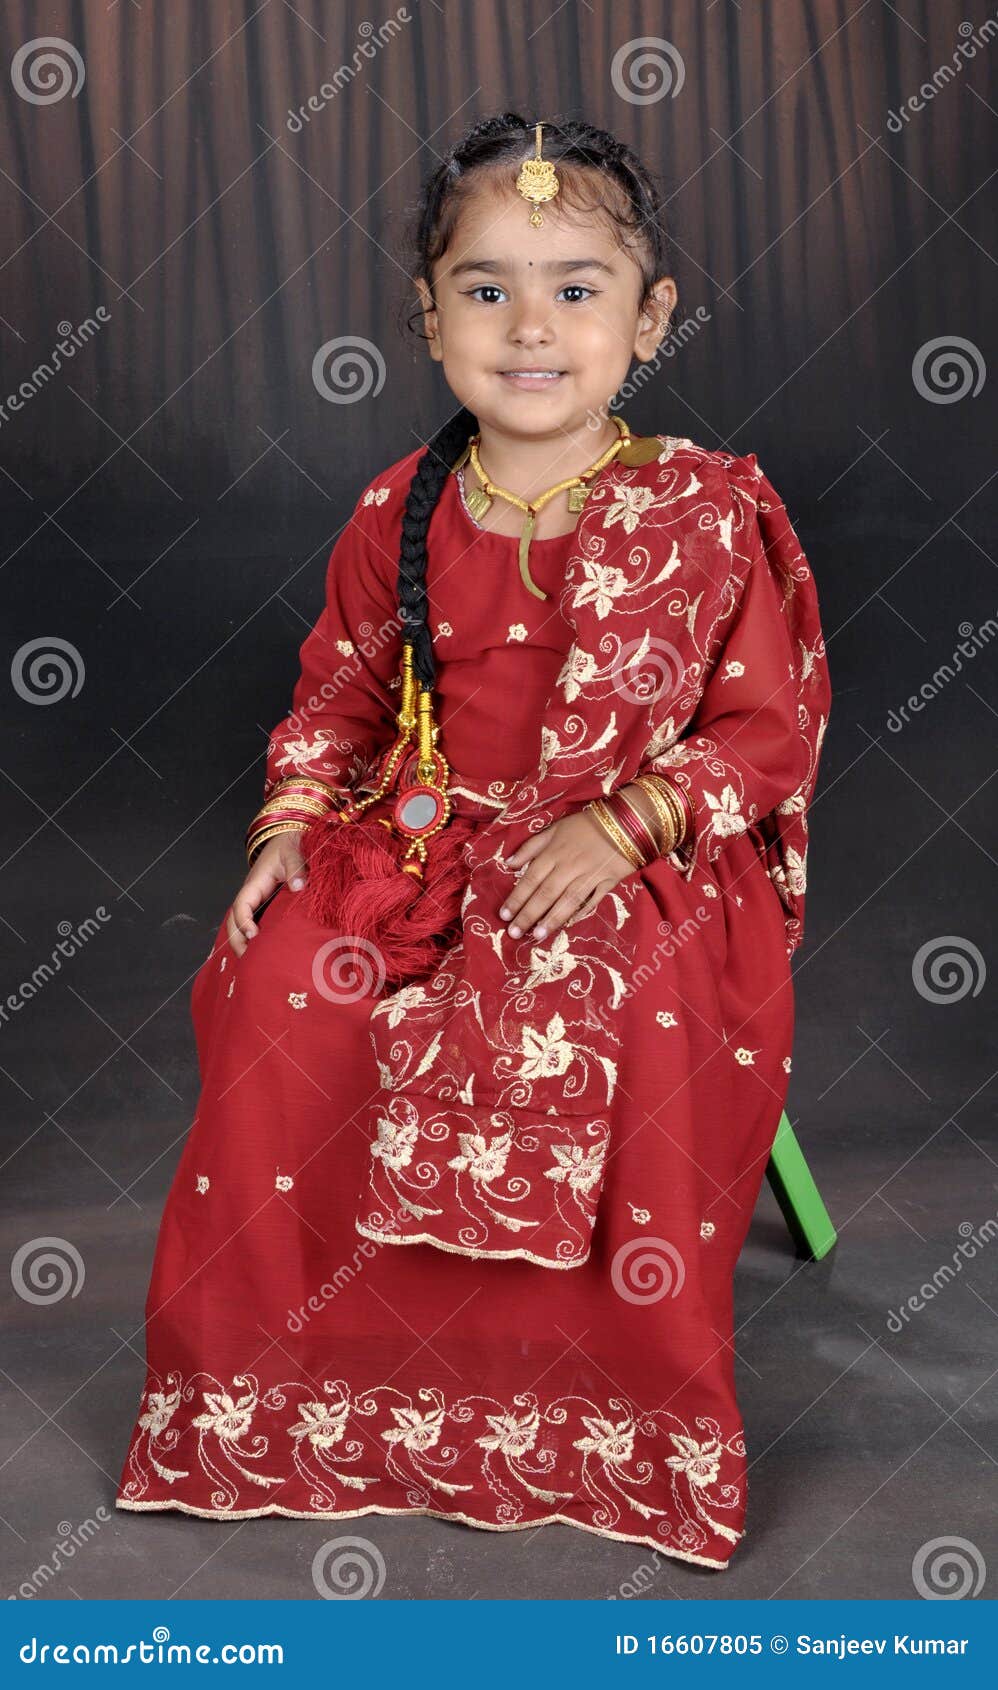 148 Punjabi Child Stock Photos - Free & Royalty-Free Stock Photos from  Dreamstime